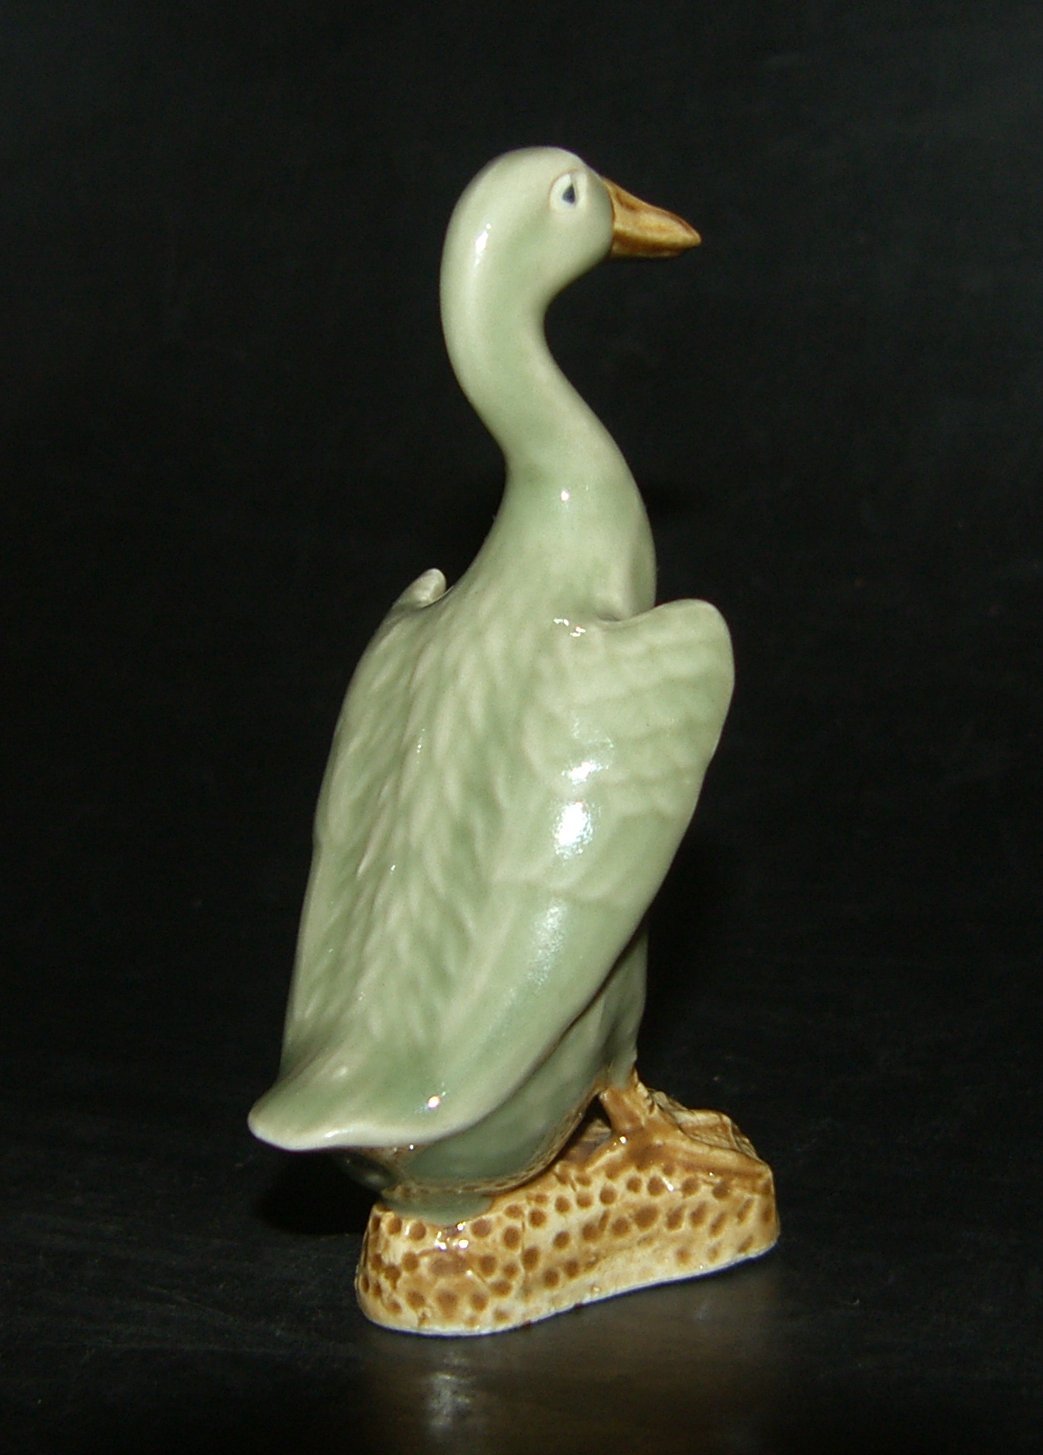 Chinese Porcelain Duck, Republic 1912 - 1949